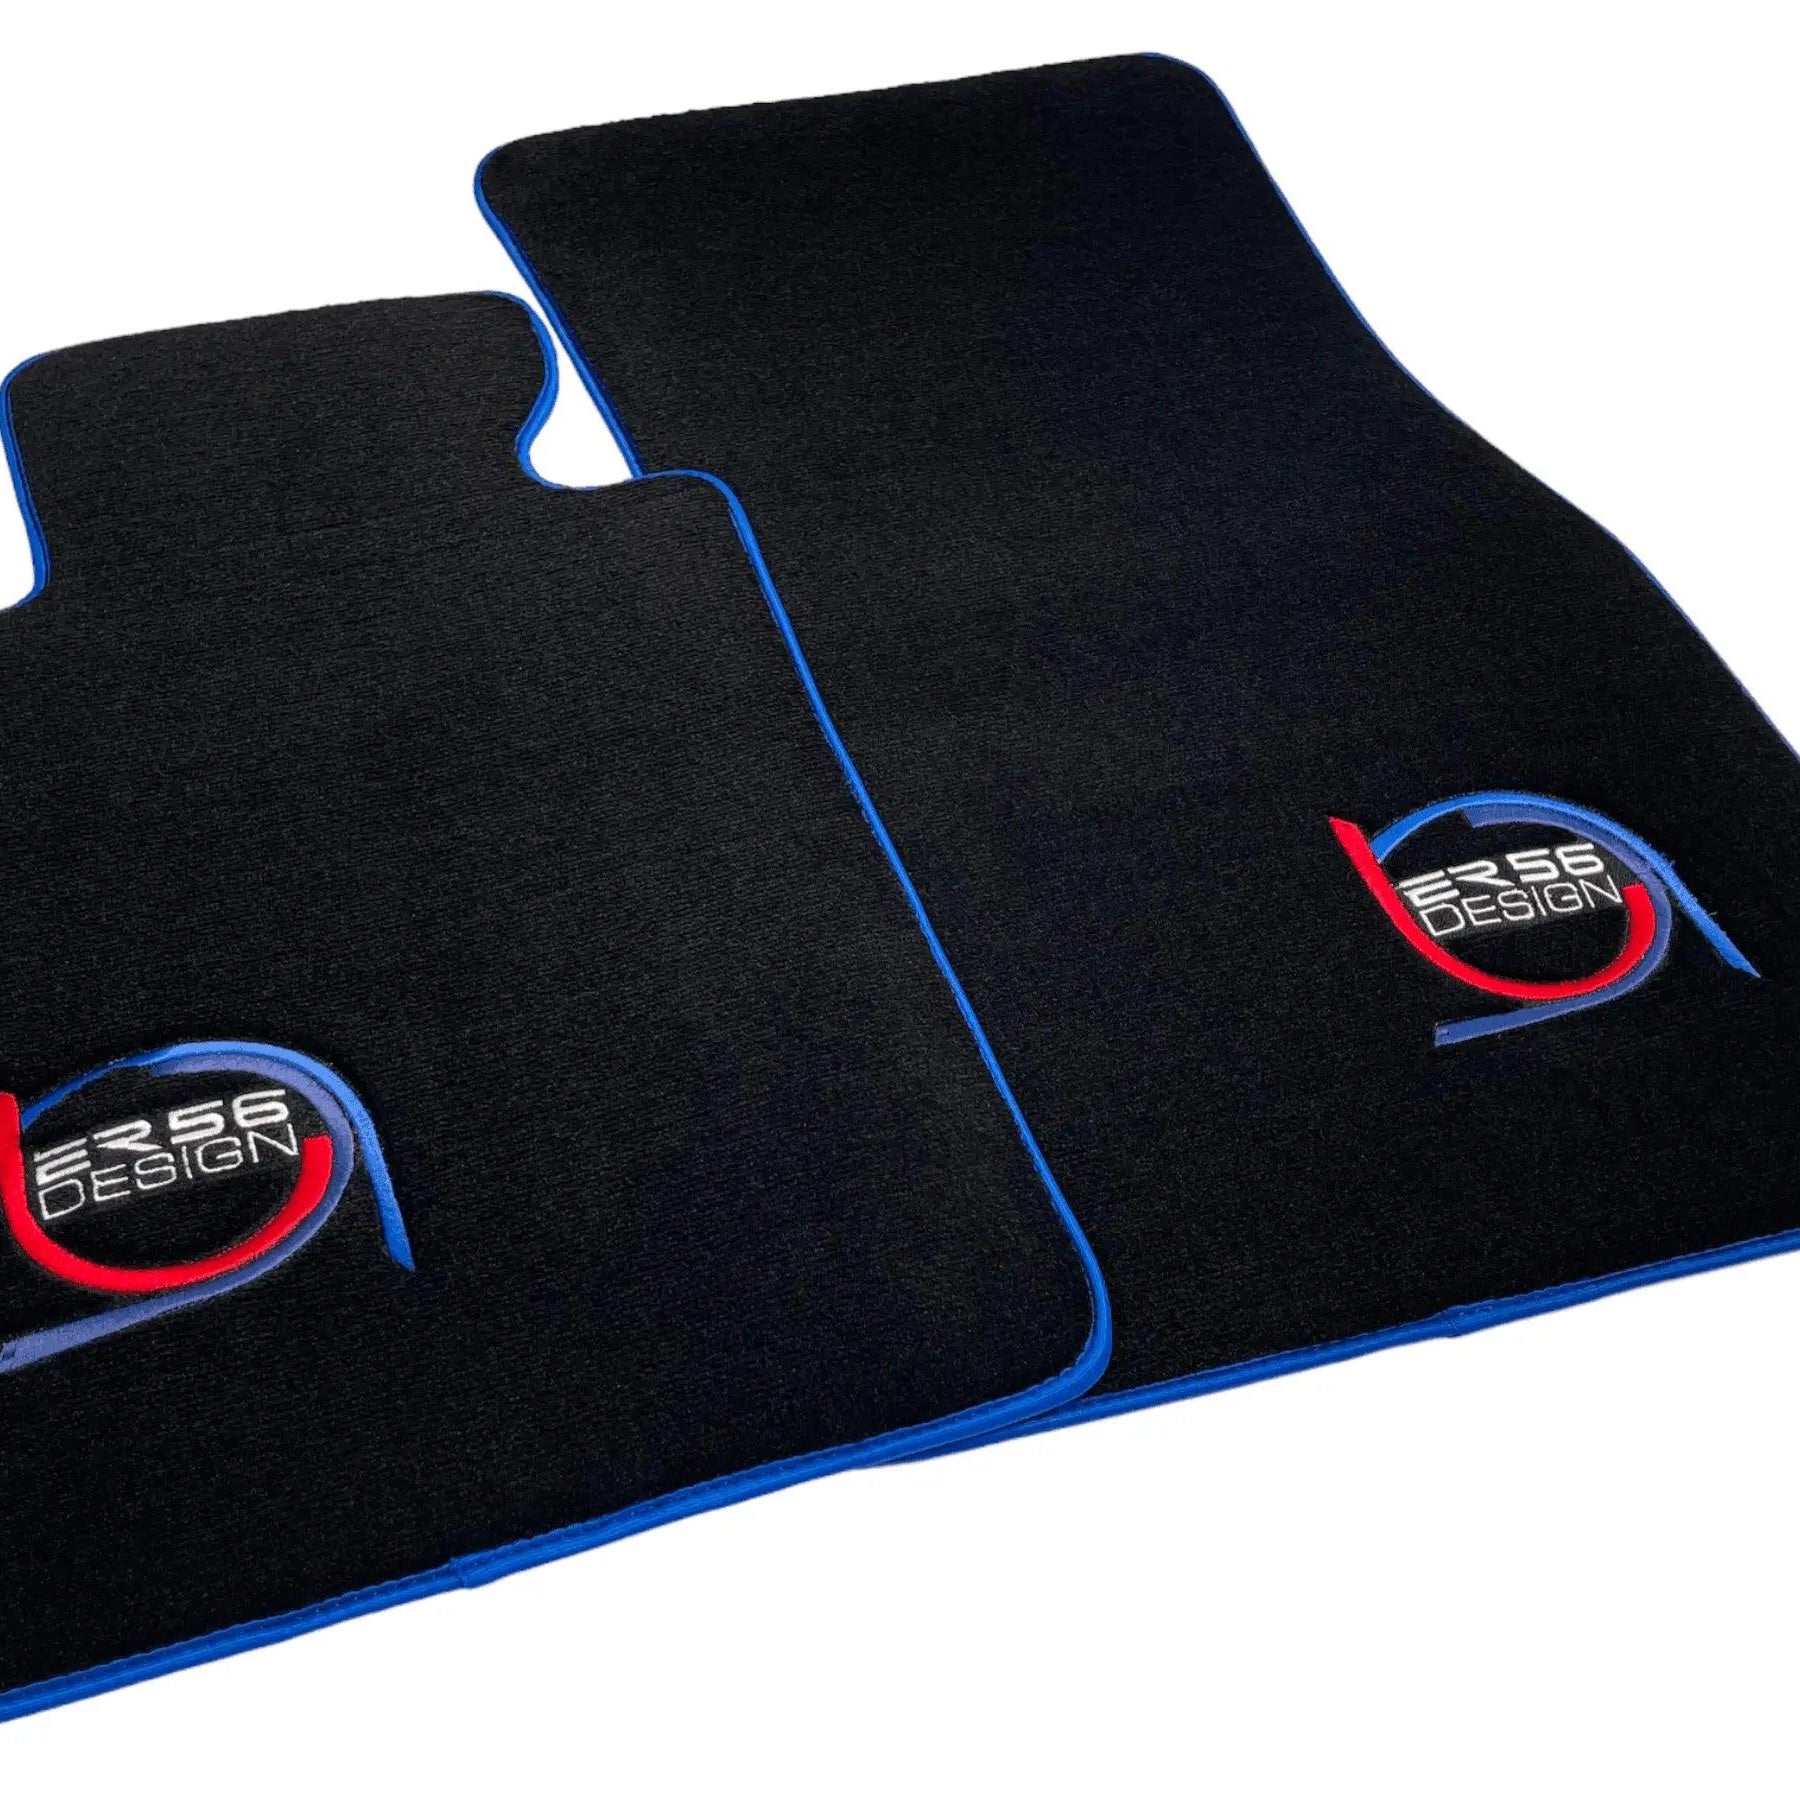 Black Floor Mats For BMW 5 Series G31 Wagon ER56 Design Limited Edition Blue Trim - AutoWin